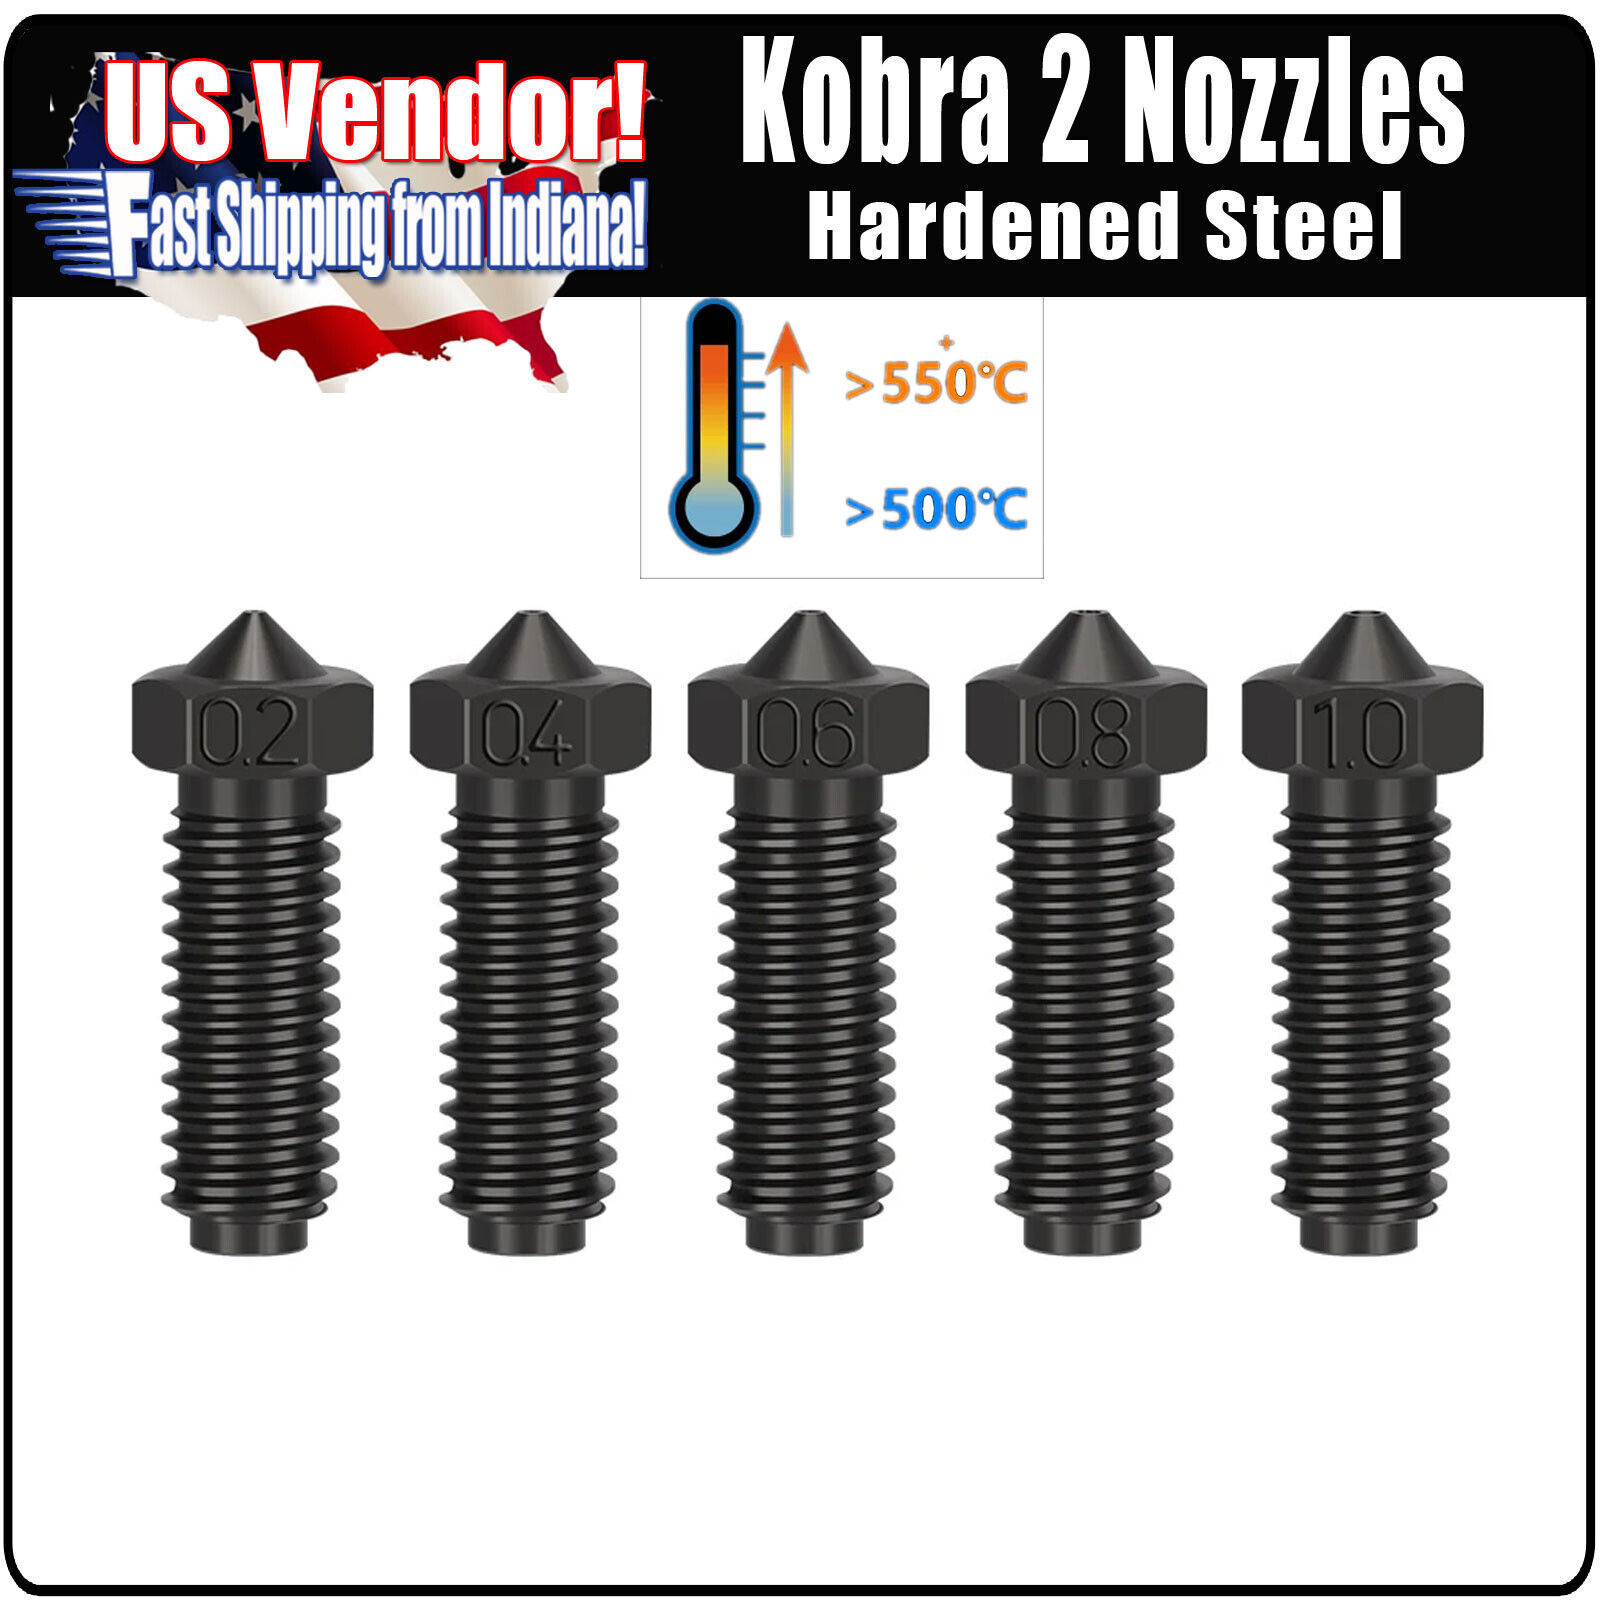 Anycubic Kobra 2 Nozzles Hardened Steel